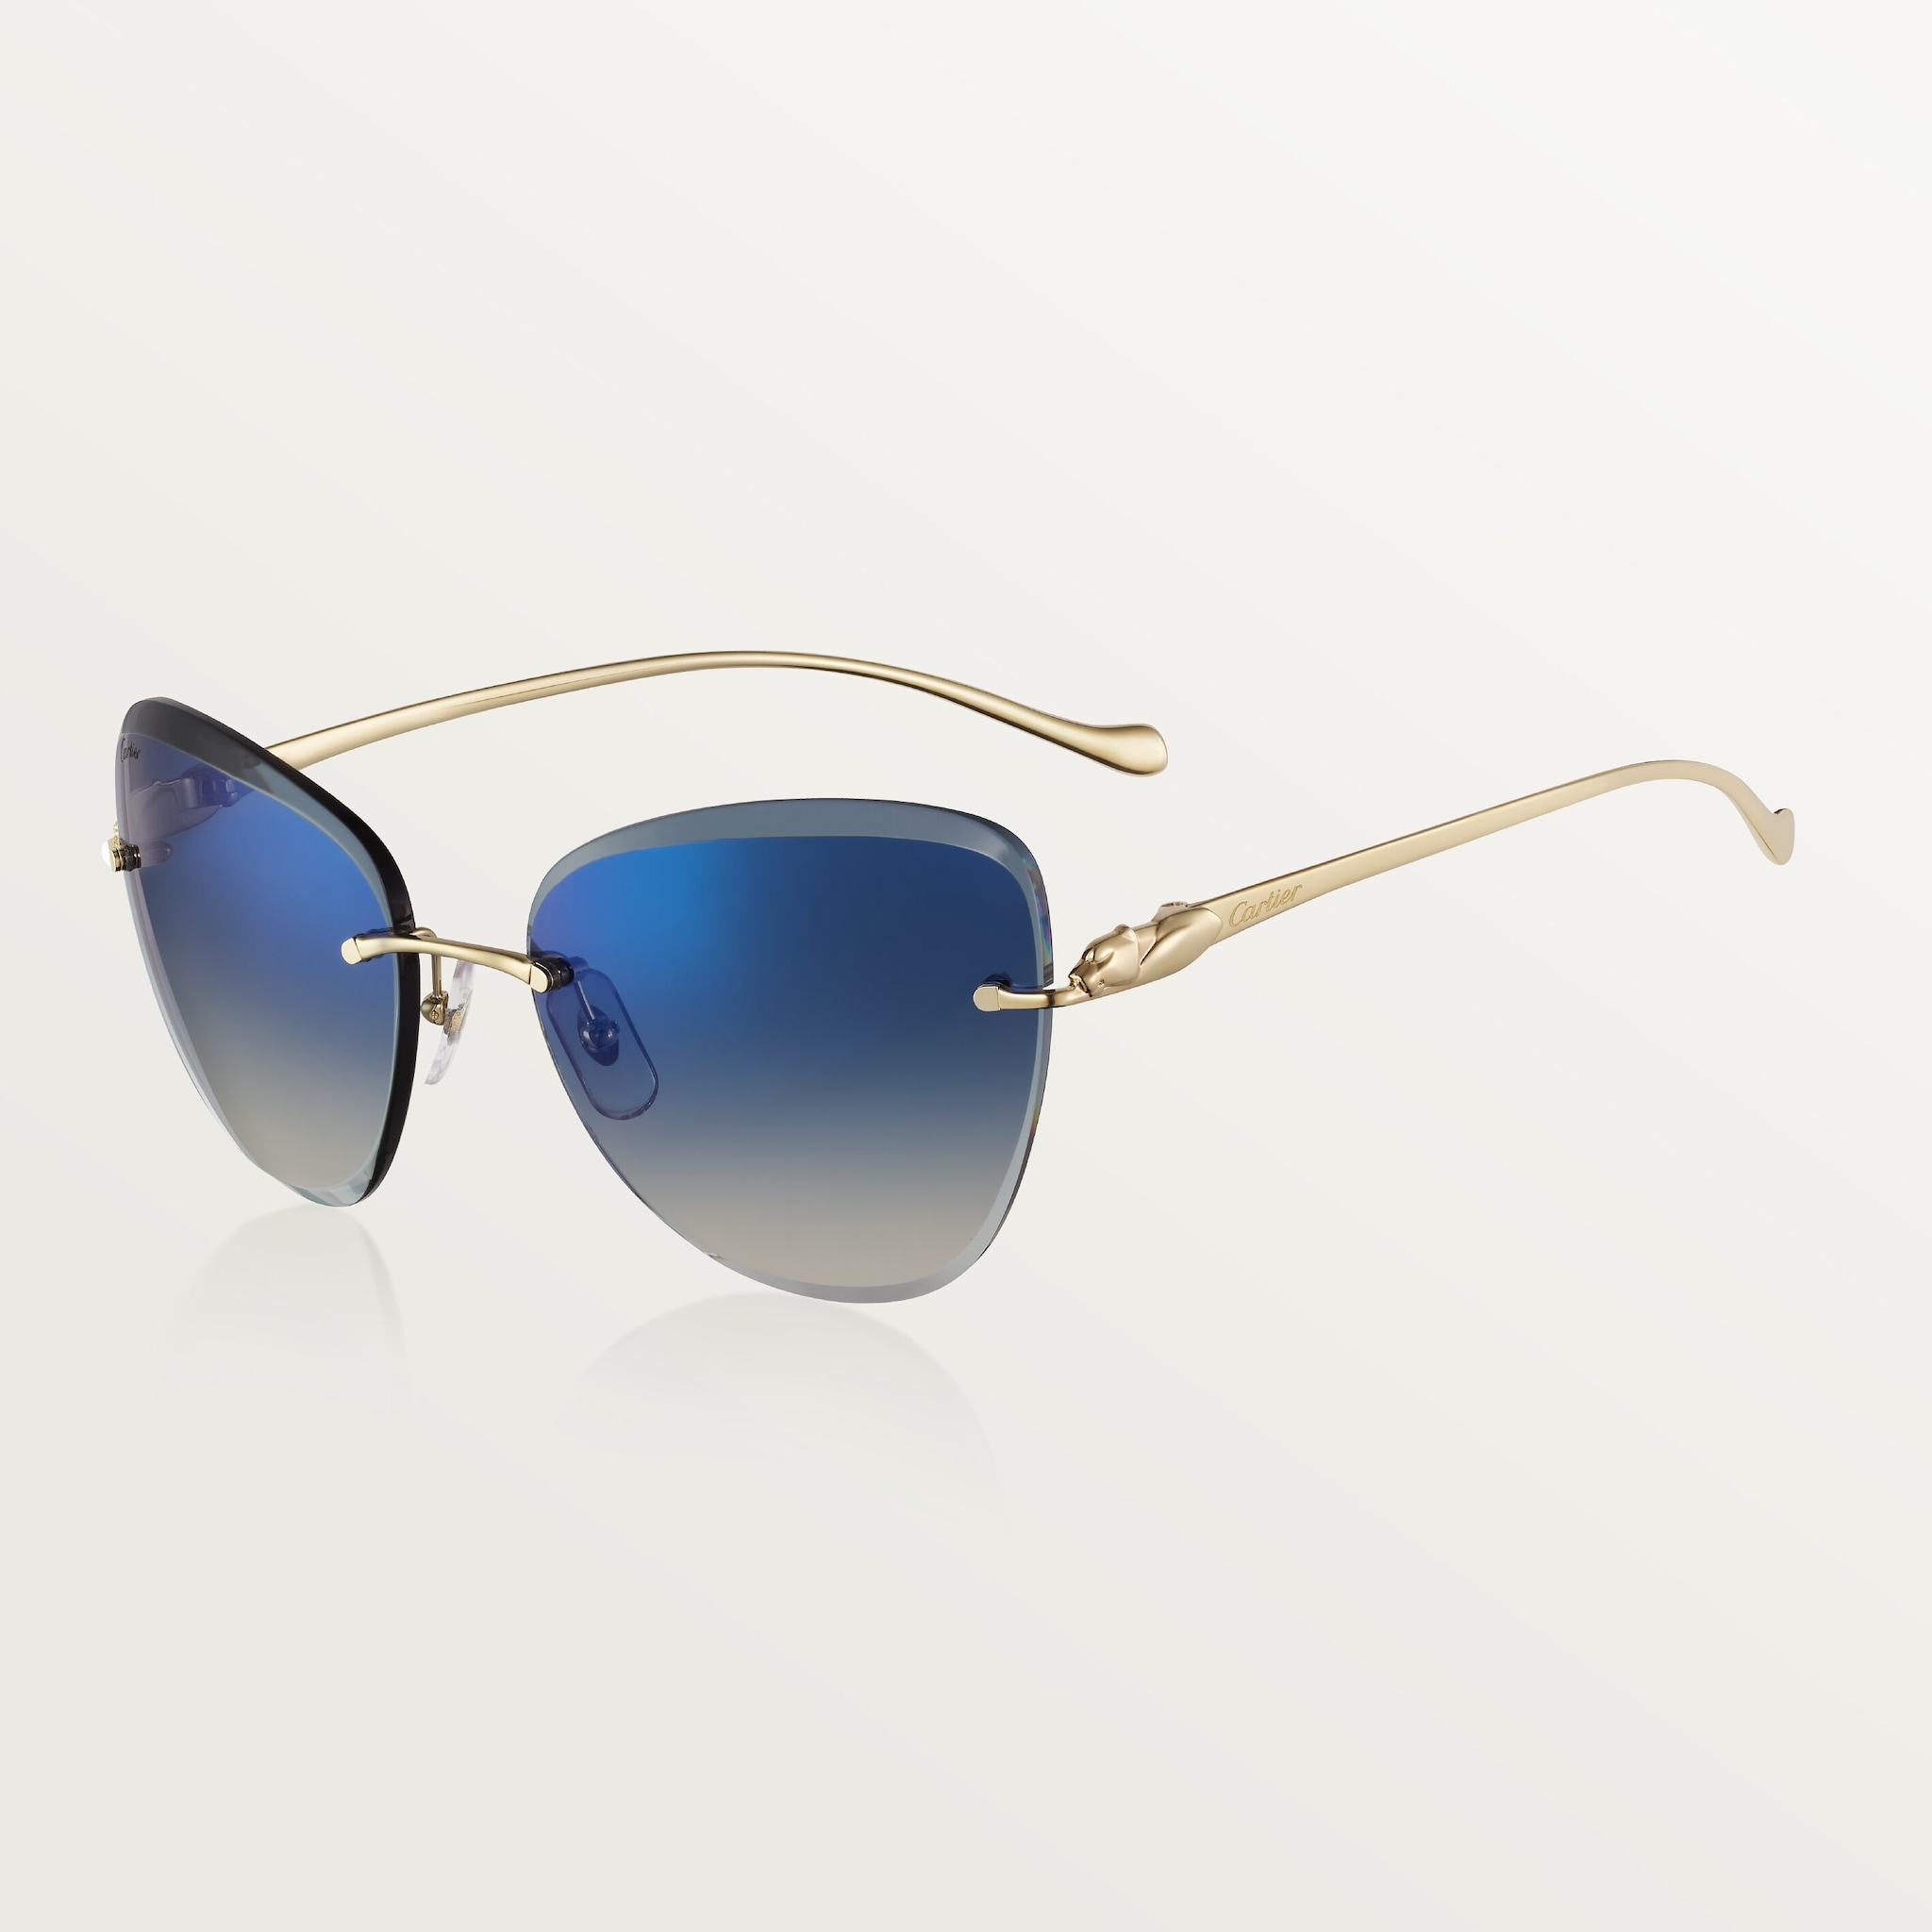 Panthère de Cartier sunglassesSmooth golden-finish metal, graduated blue lenses